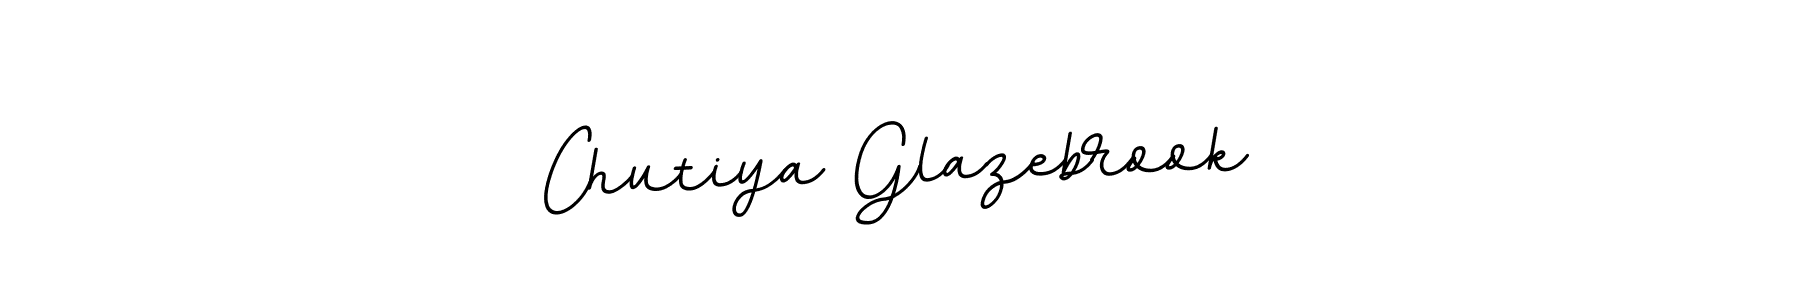 How to Draw Chutiya Glazebrook signature style? BallpointsItalic-DORy9 is a latest design signature styles for name Chutiya Glazebrook. Chutiya Glazebrook signature style 11 images and pictures png